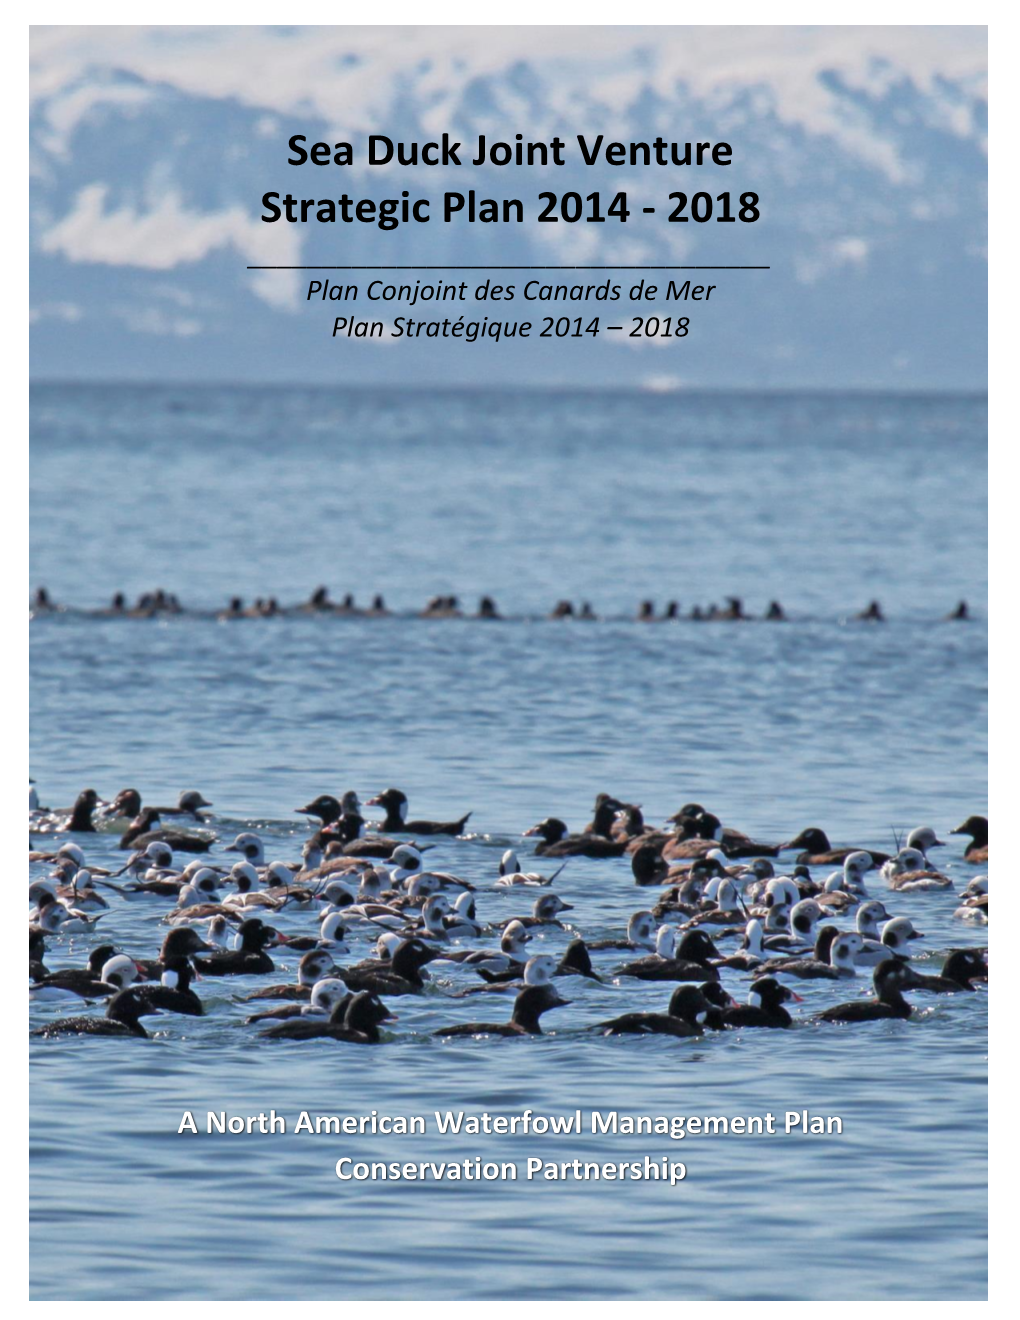 Sea Duck Joint Venture Strategic Plan 2014-2018